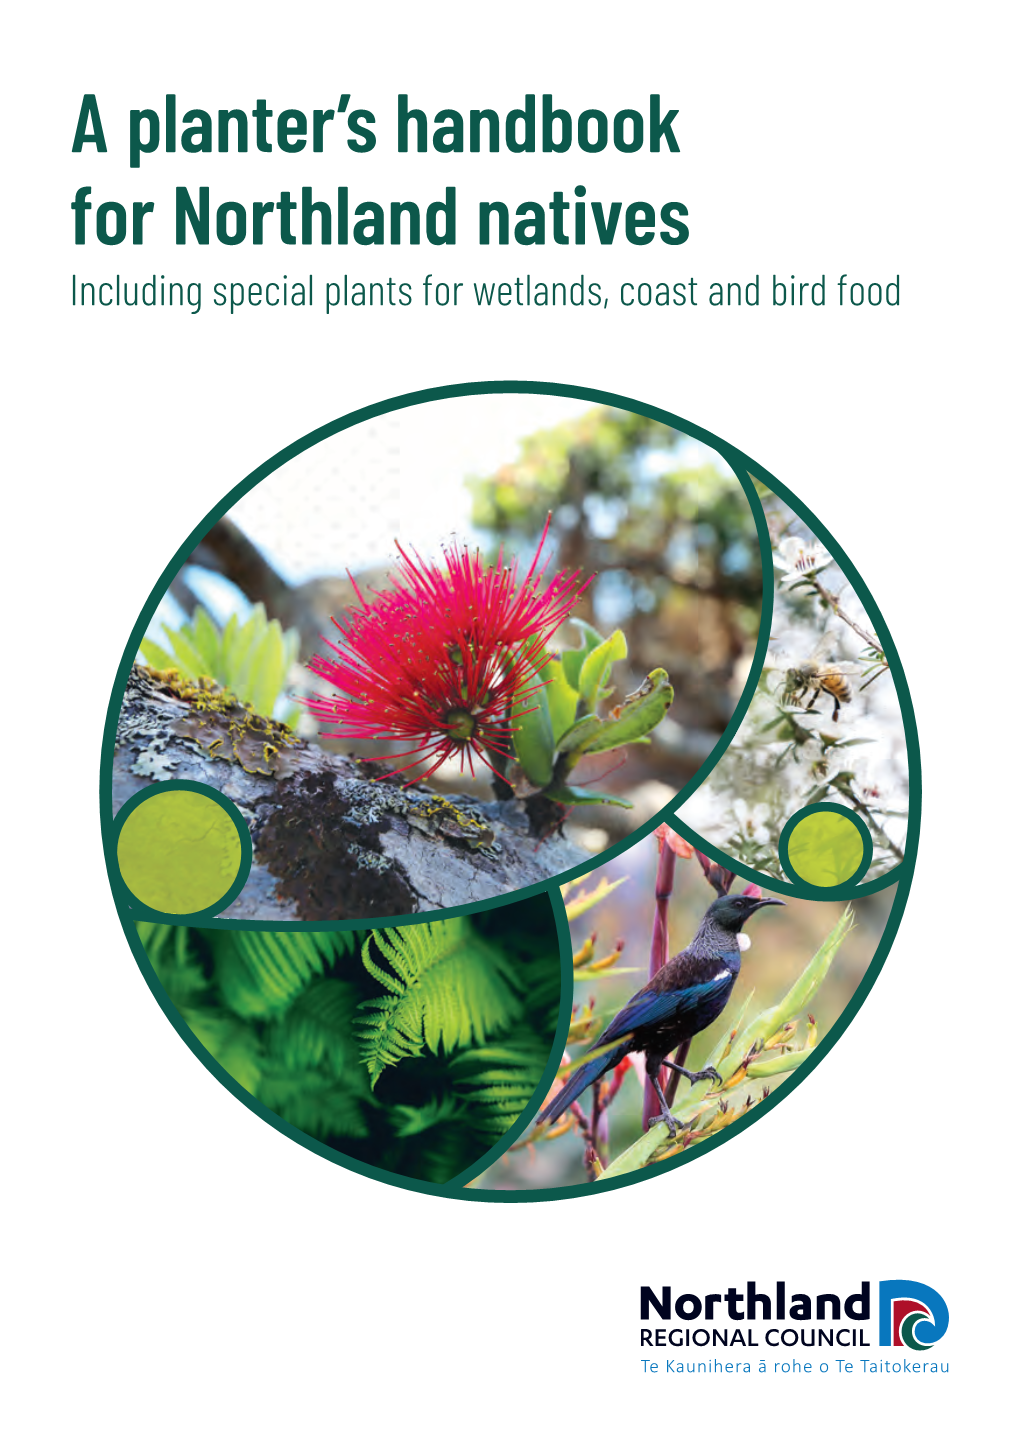 A Planter's Handbook for Northland Natives